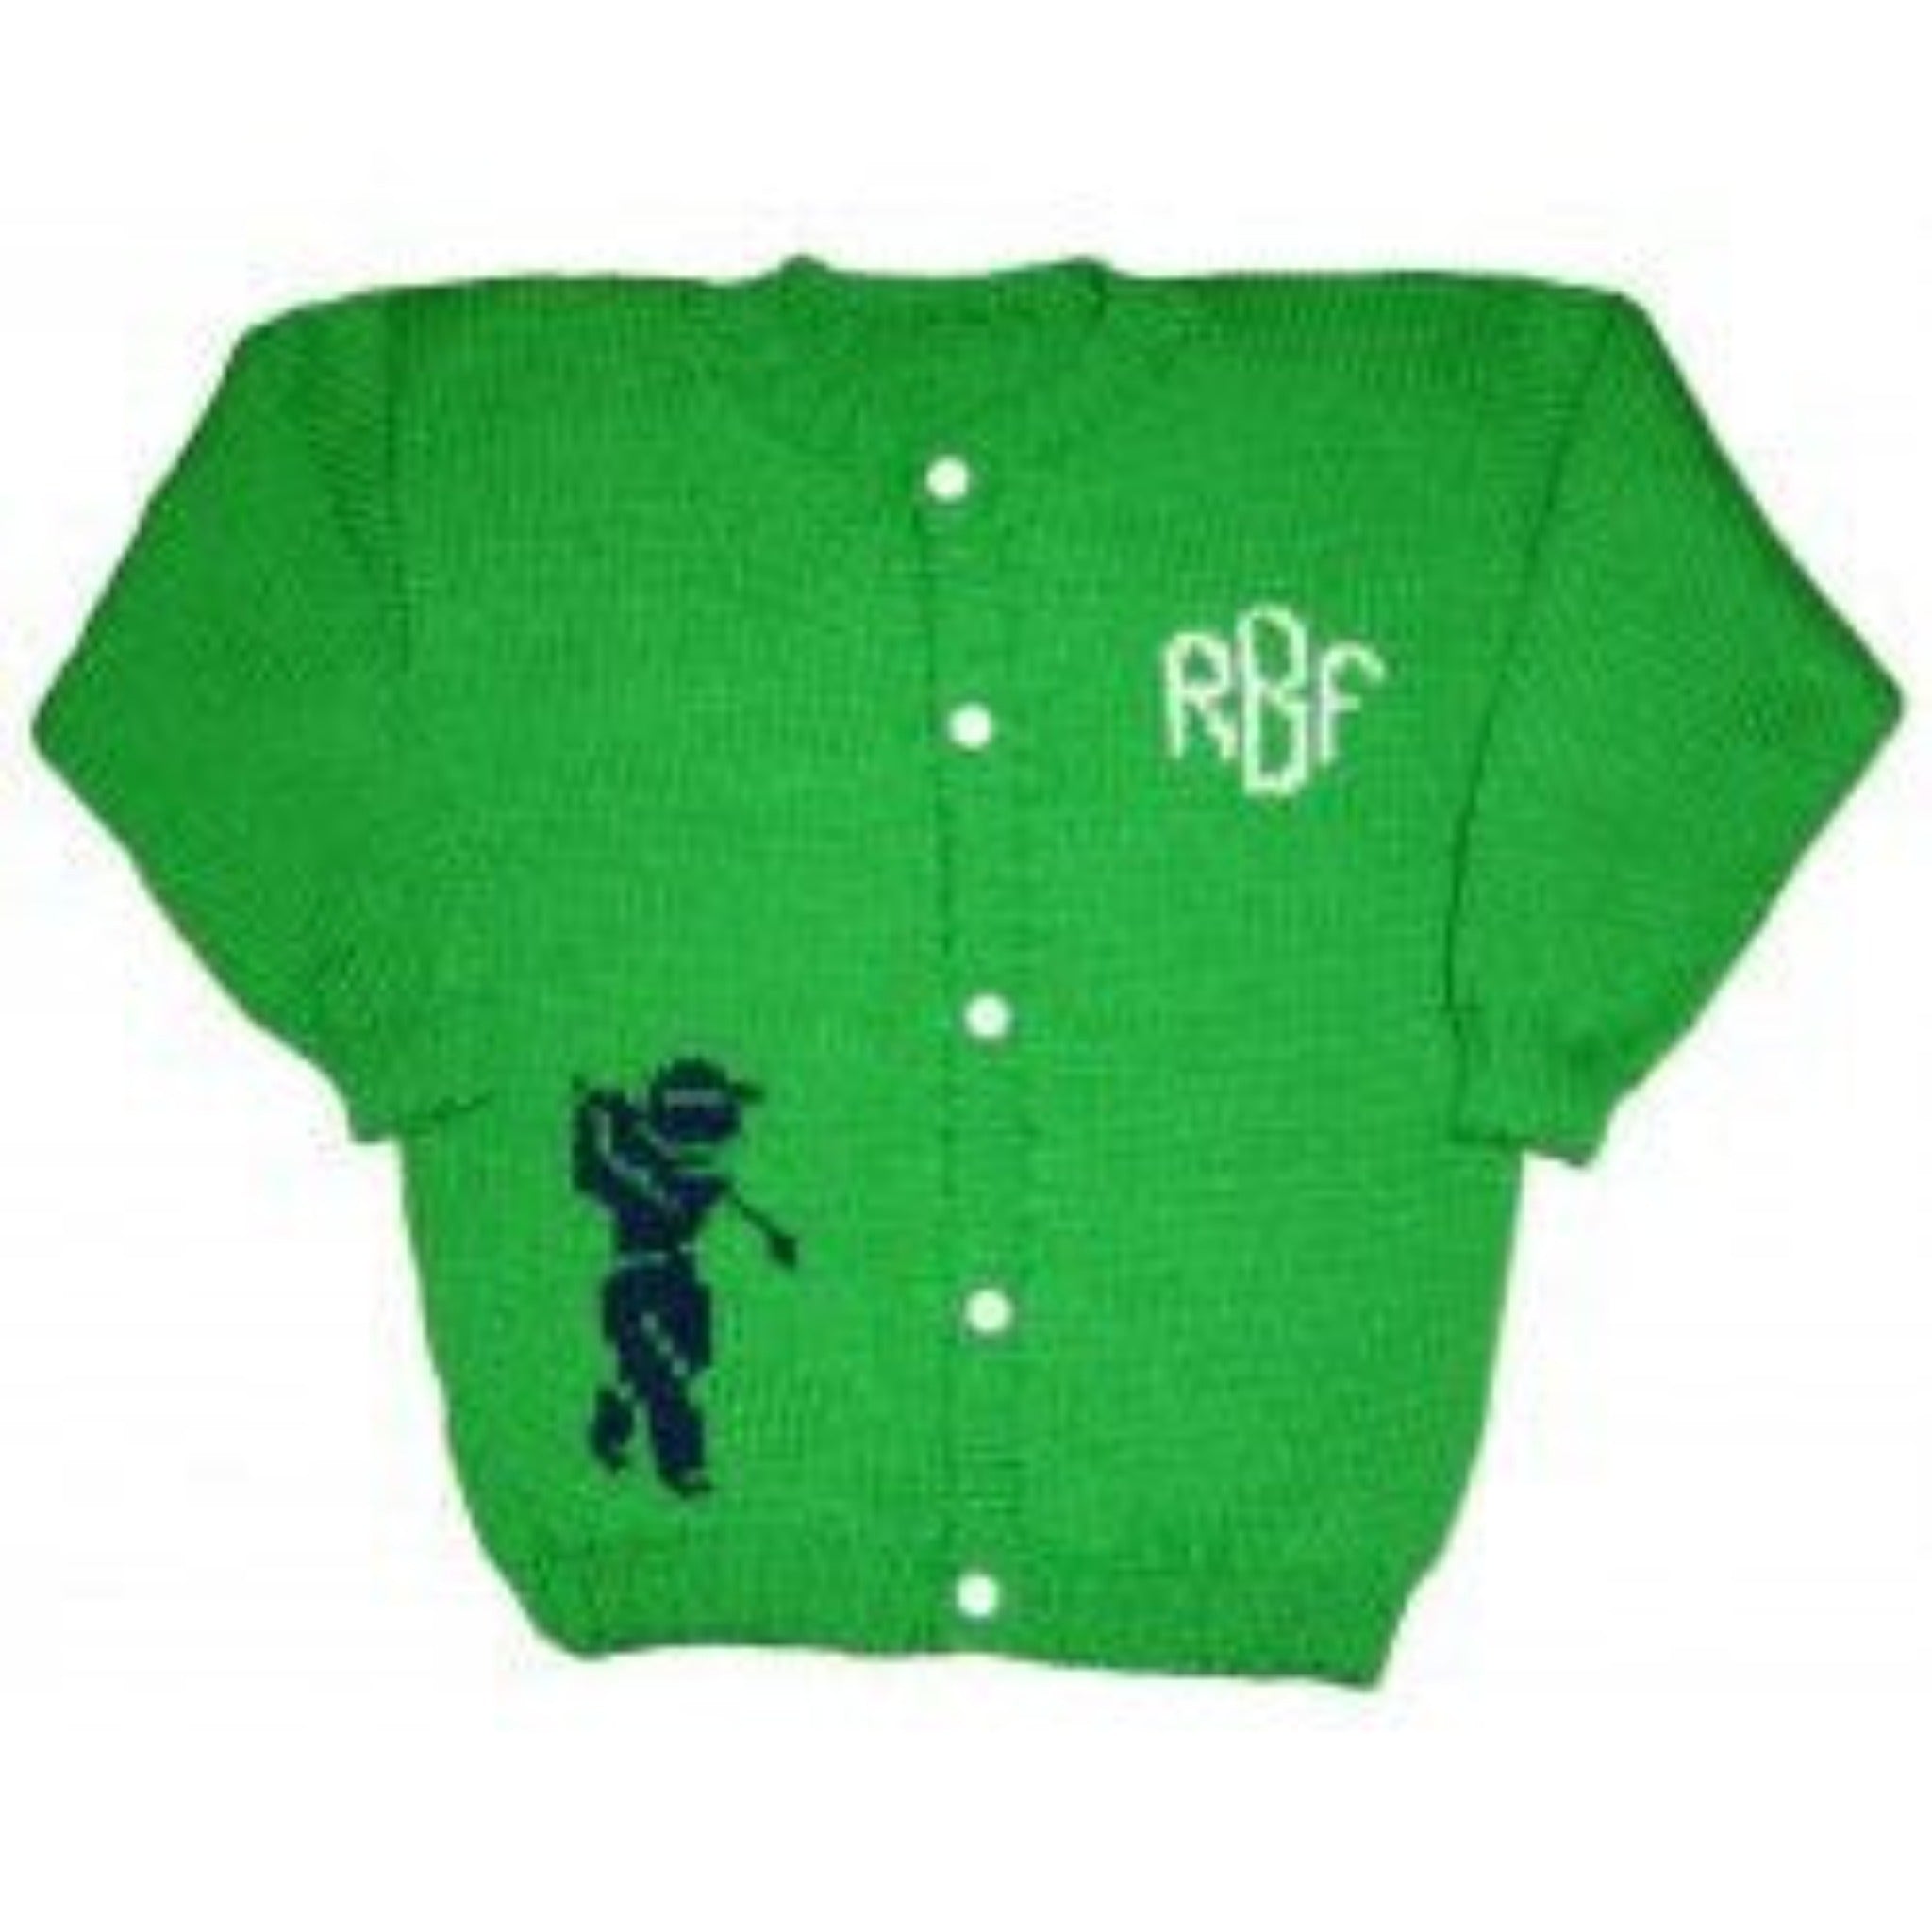 Monogrammed Golf Cardigan for Children - Custom Knits for Baby